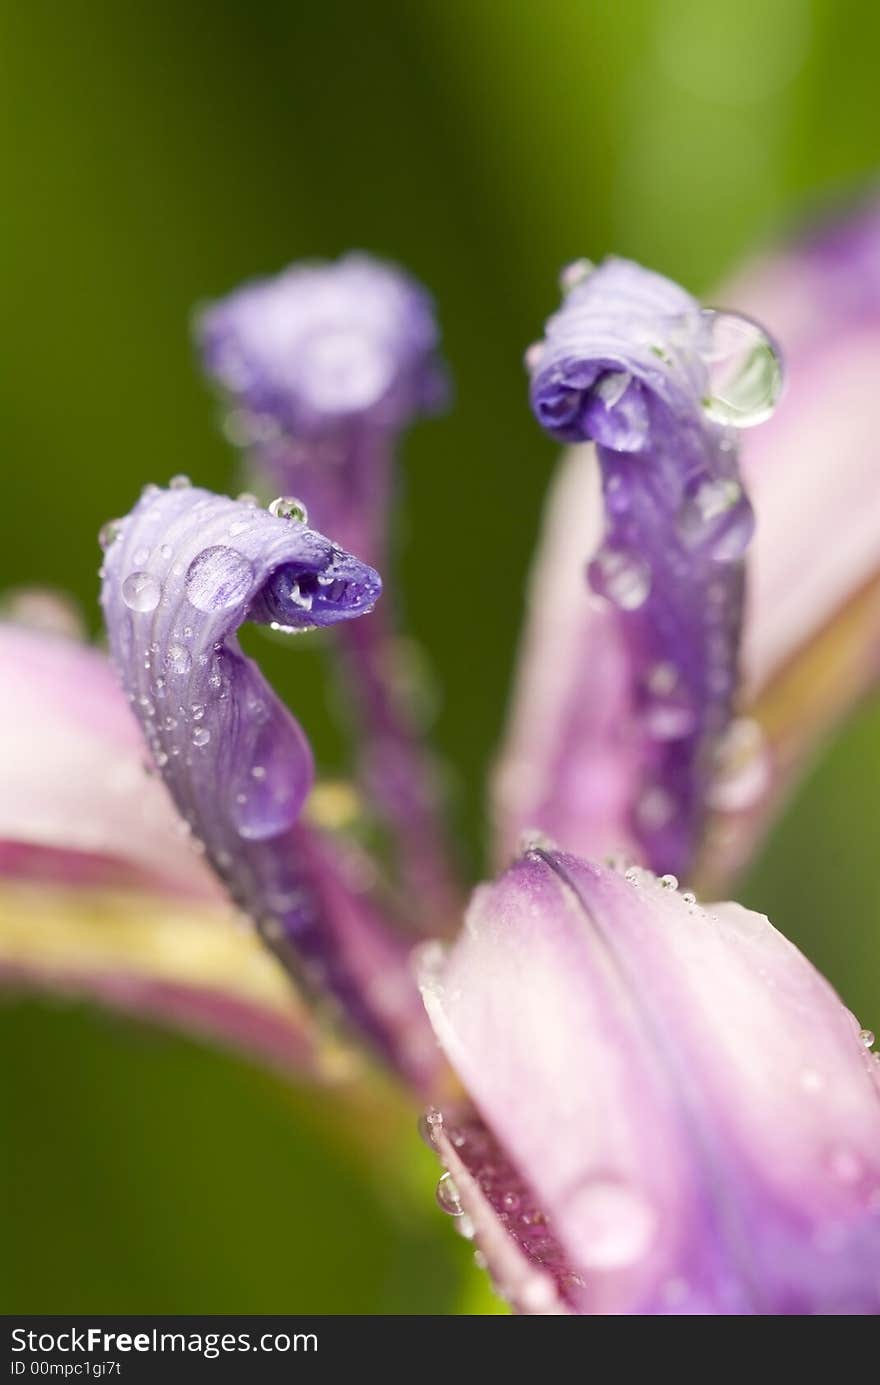 Drops of water on an iris flower